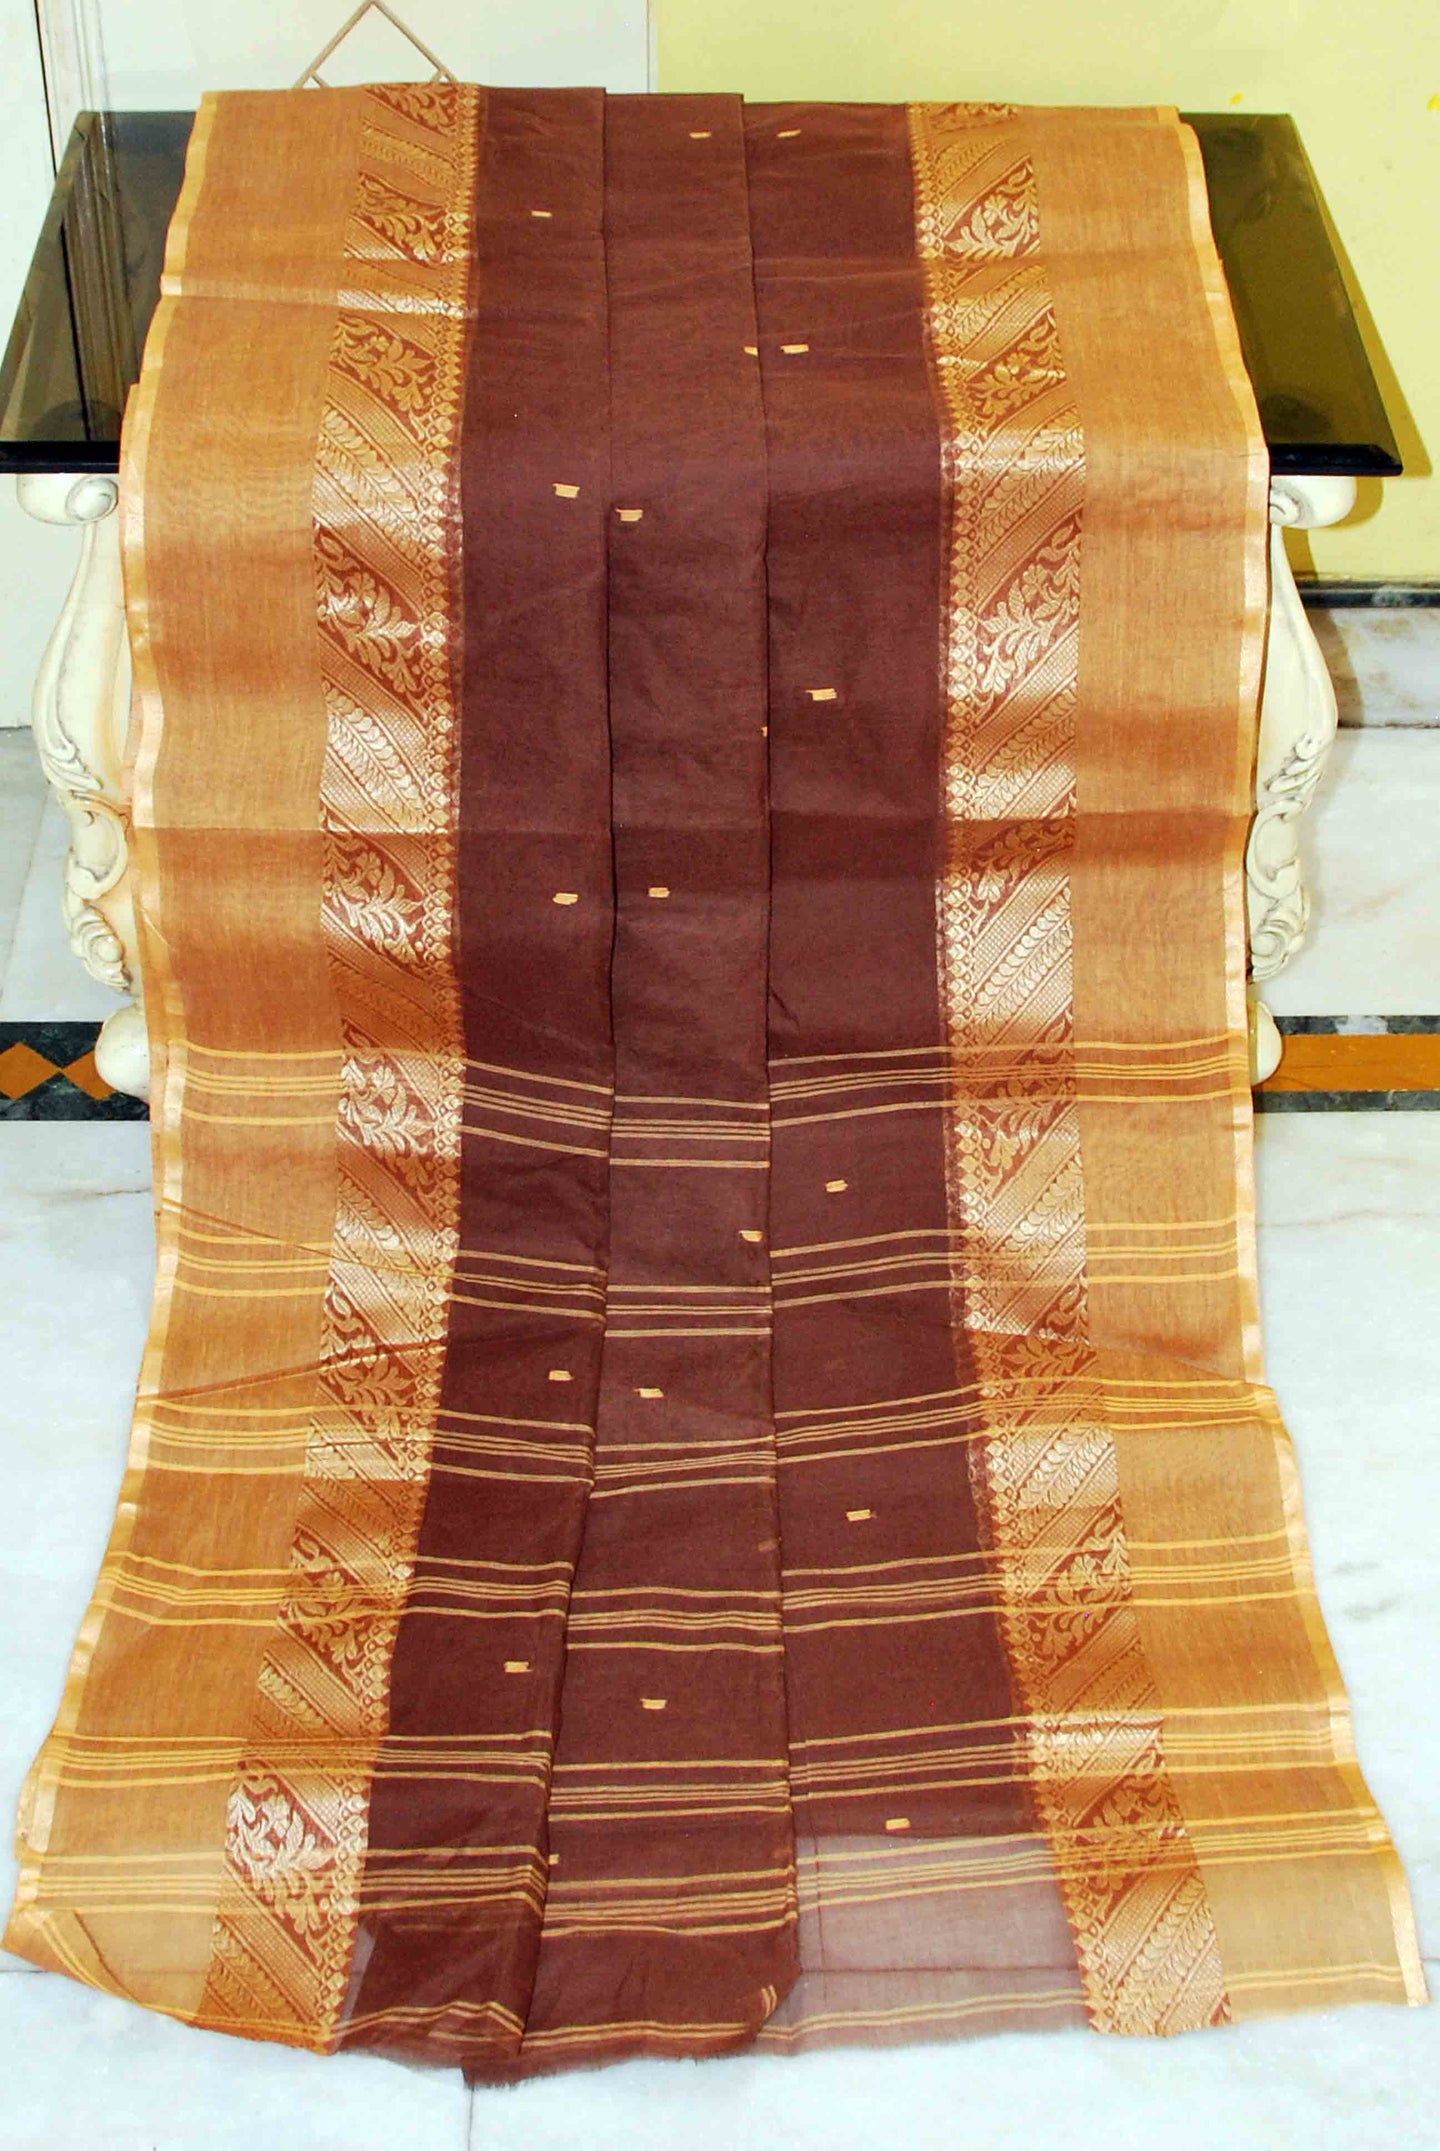 Bengal Handloom Cotton Saree in Chocolate Brown and Warm Beige